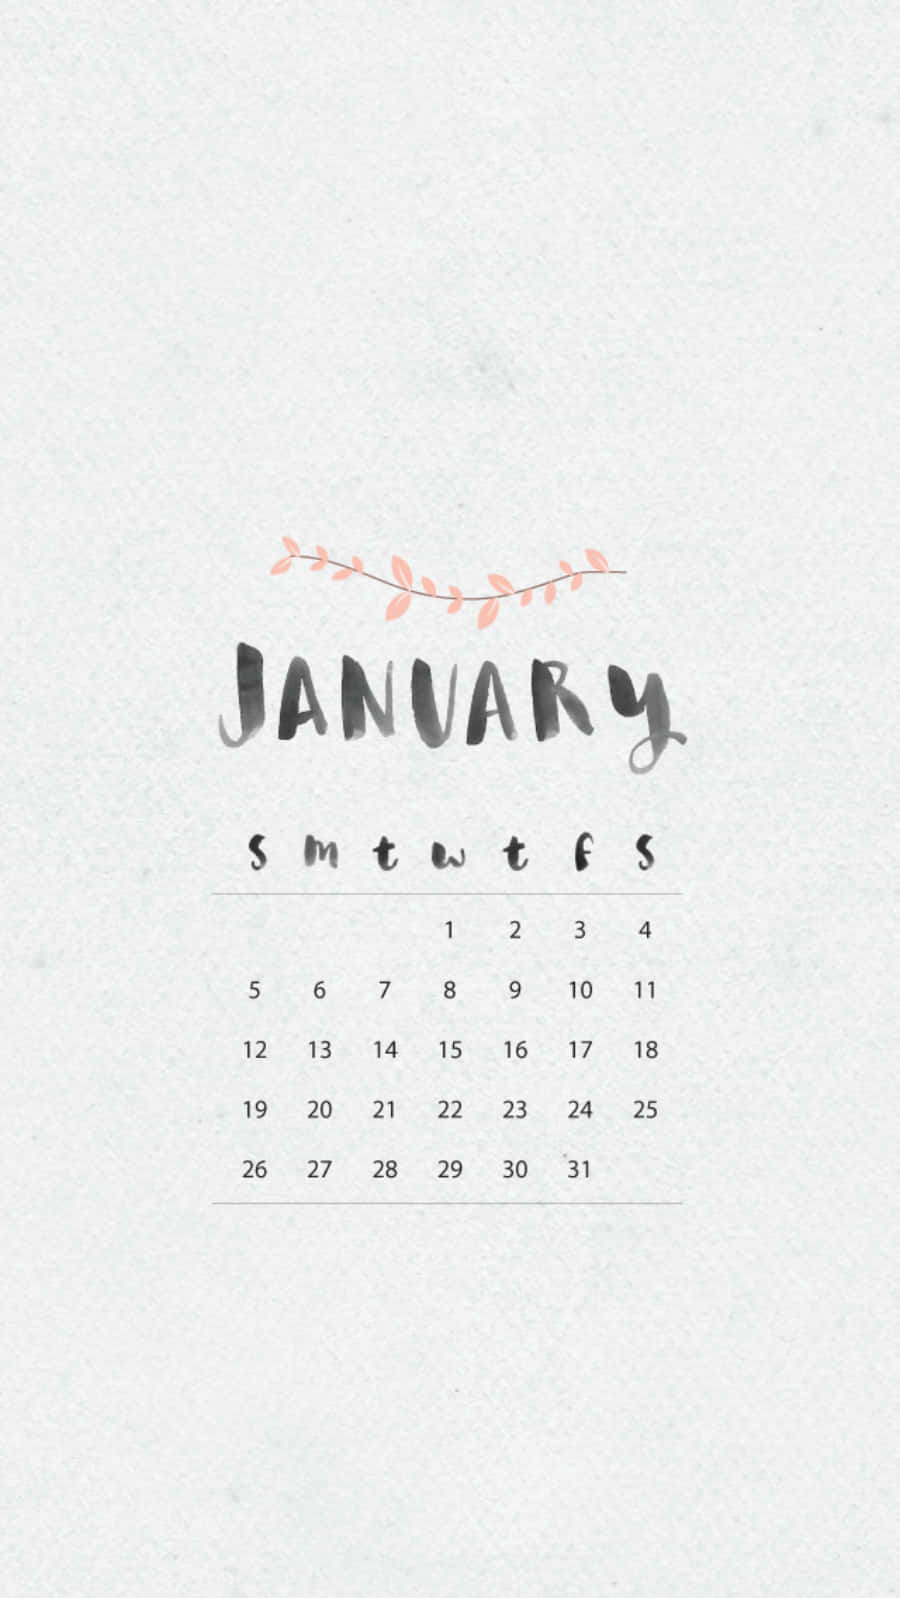 January Calendar Wallpaper - January Wallpaper Wallpaper